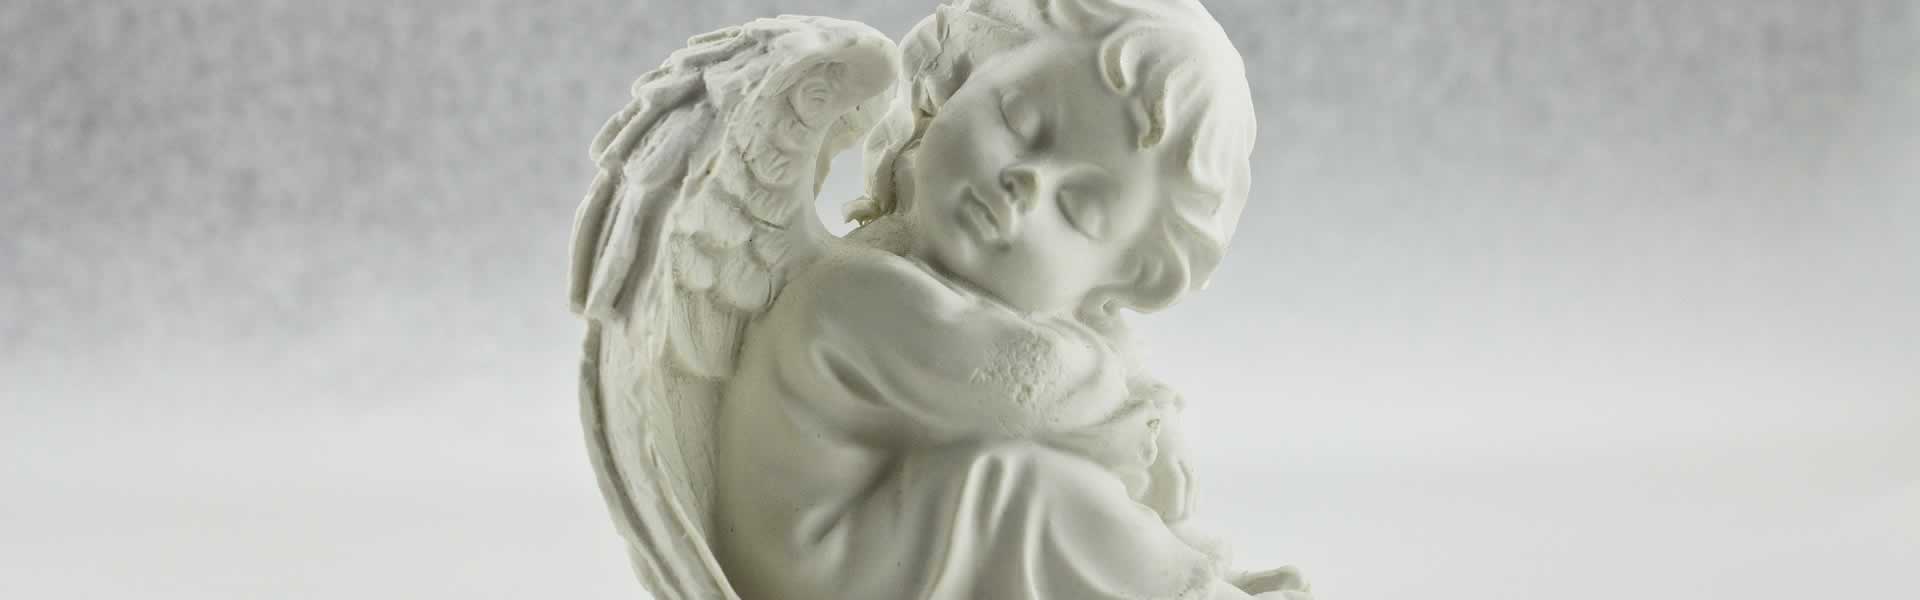 Scultura angelo cimiteriale